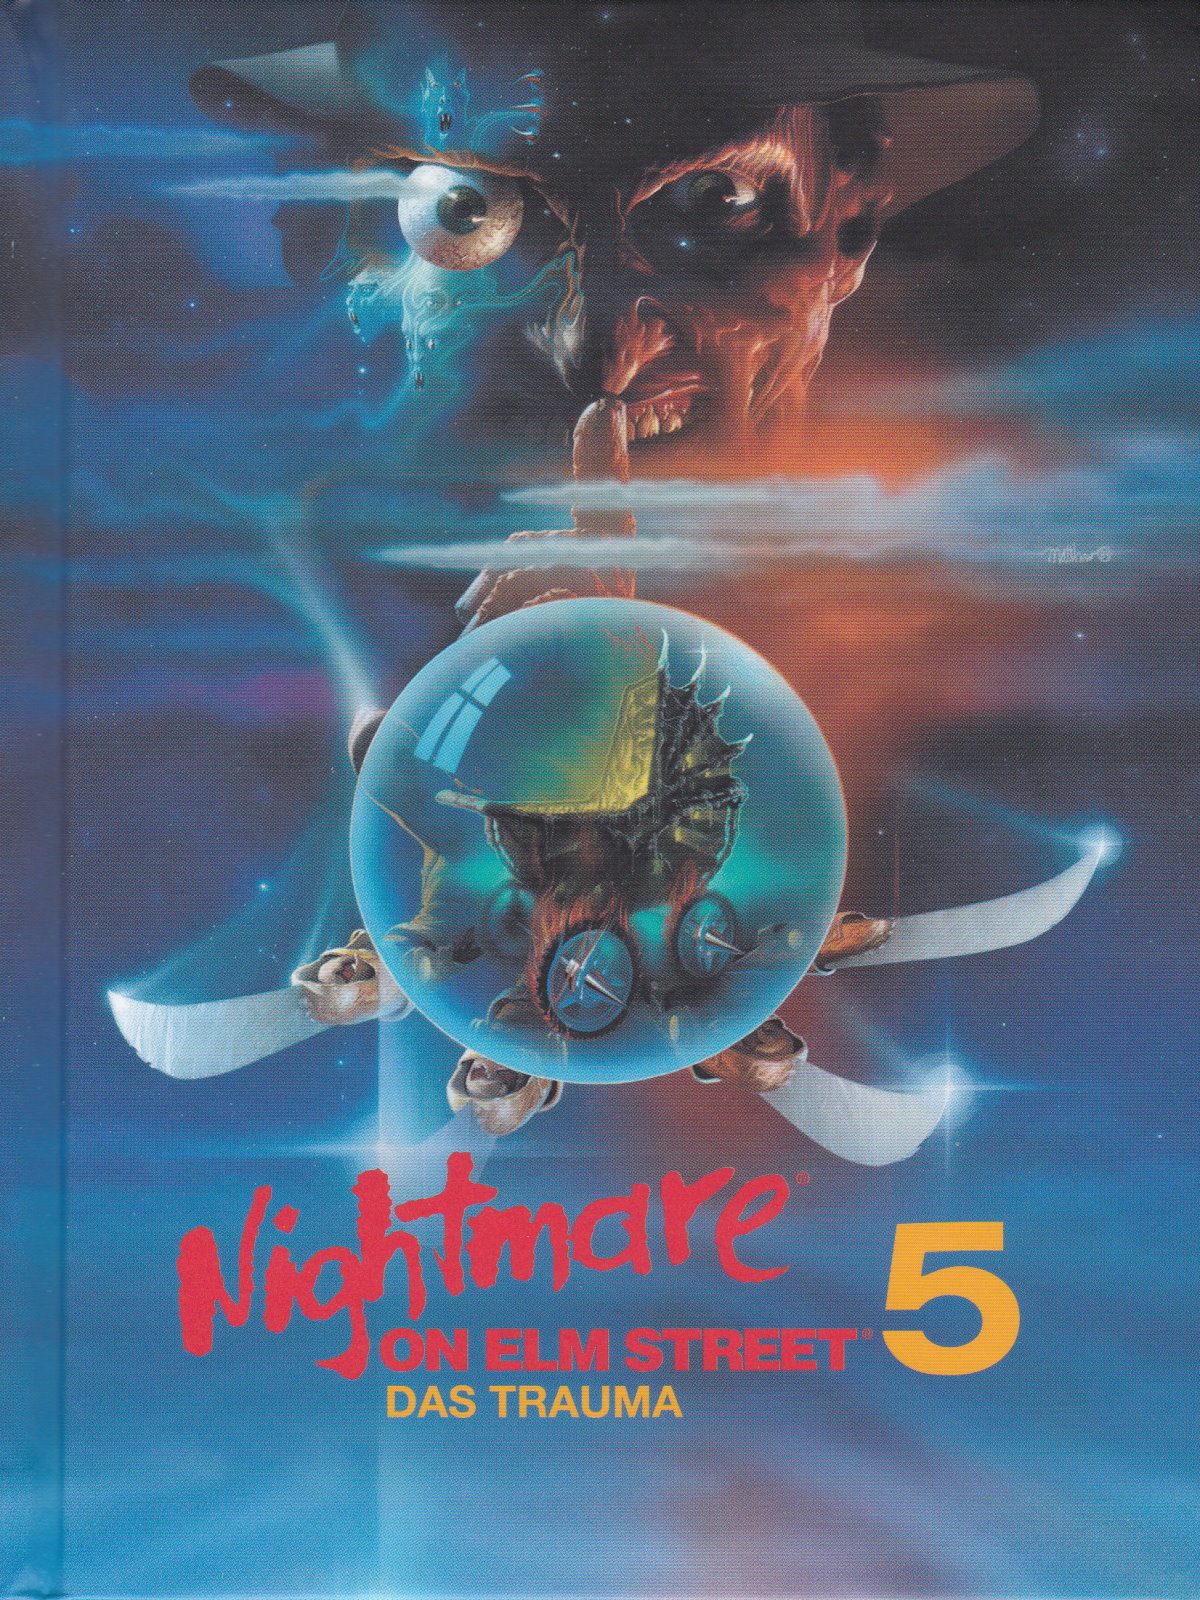 Cover - Nightmare on Elm Street 5 - Das Trauma.jpg